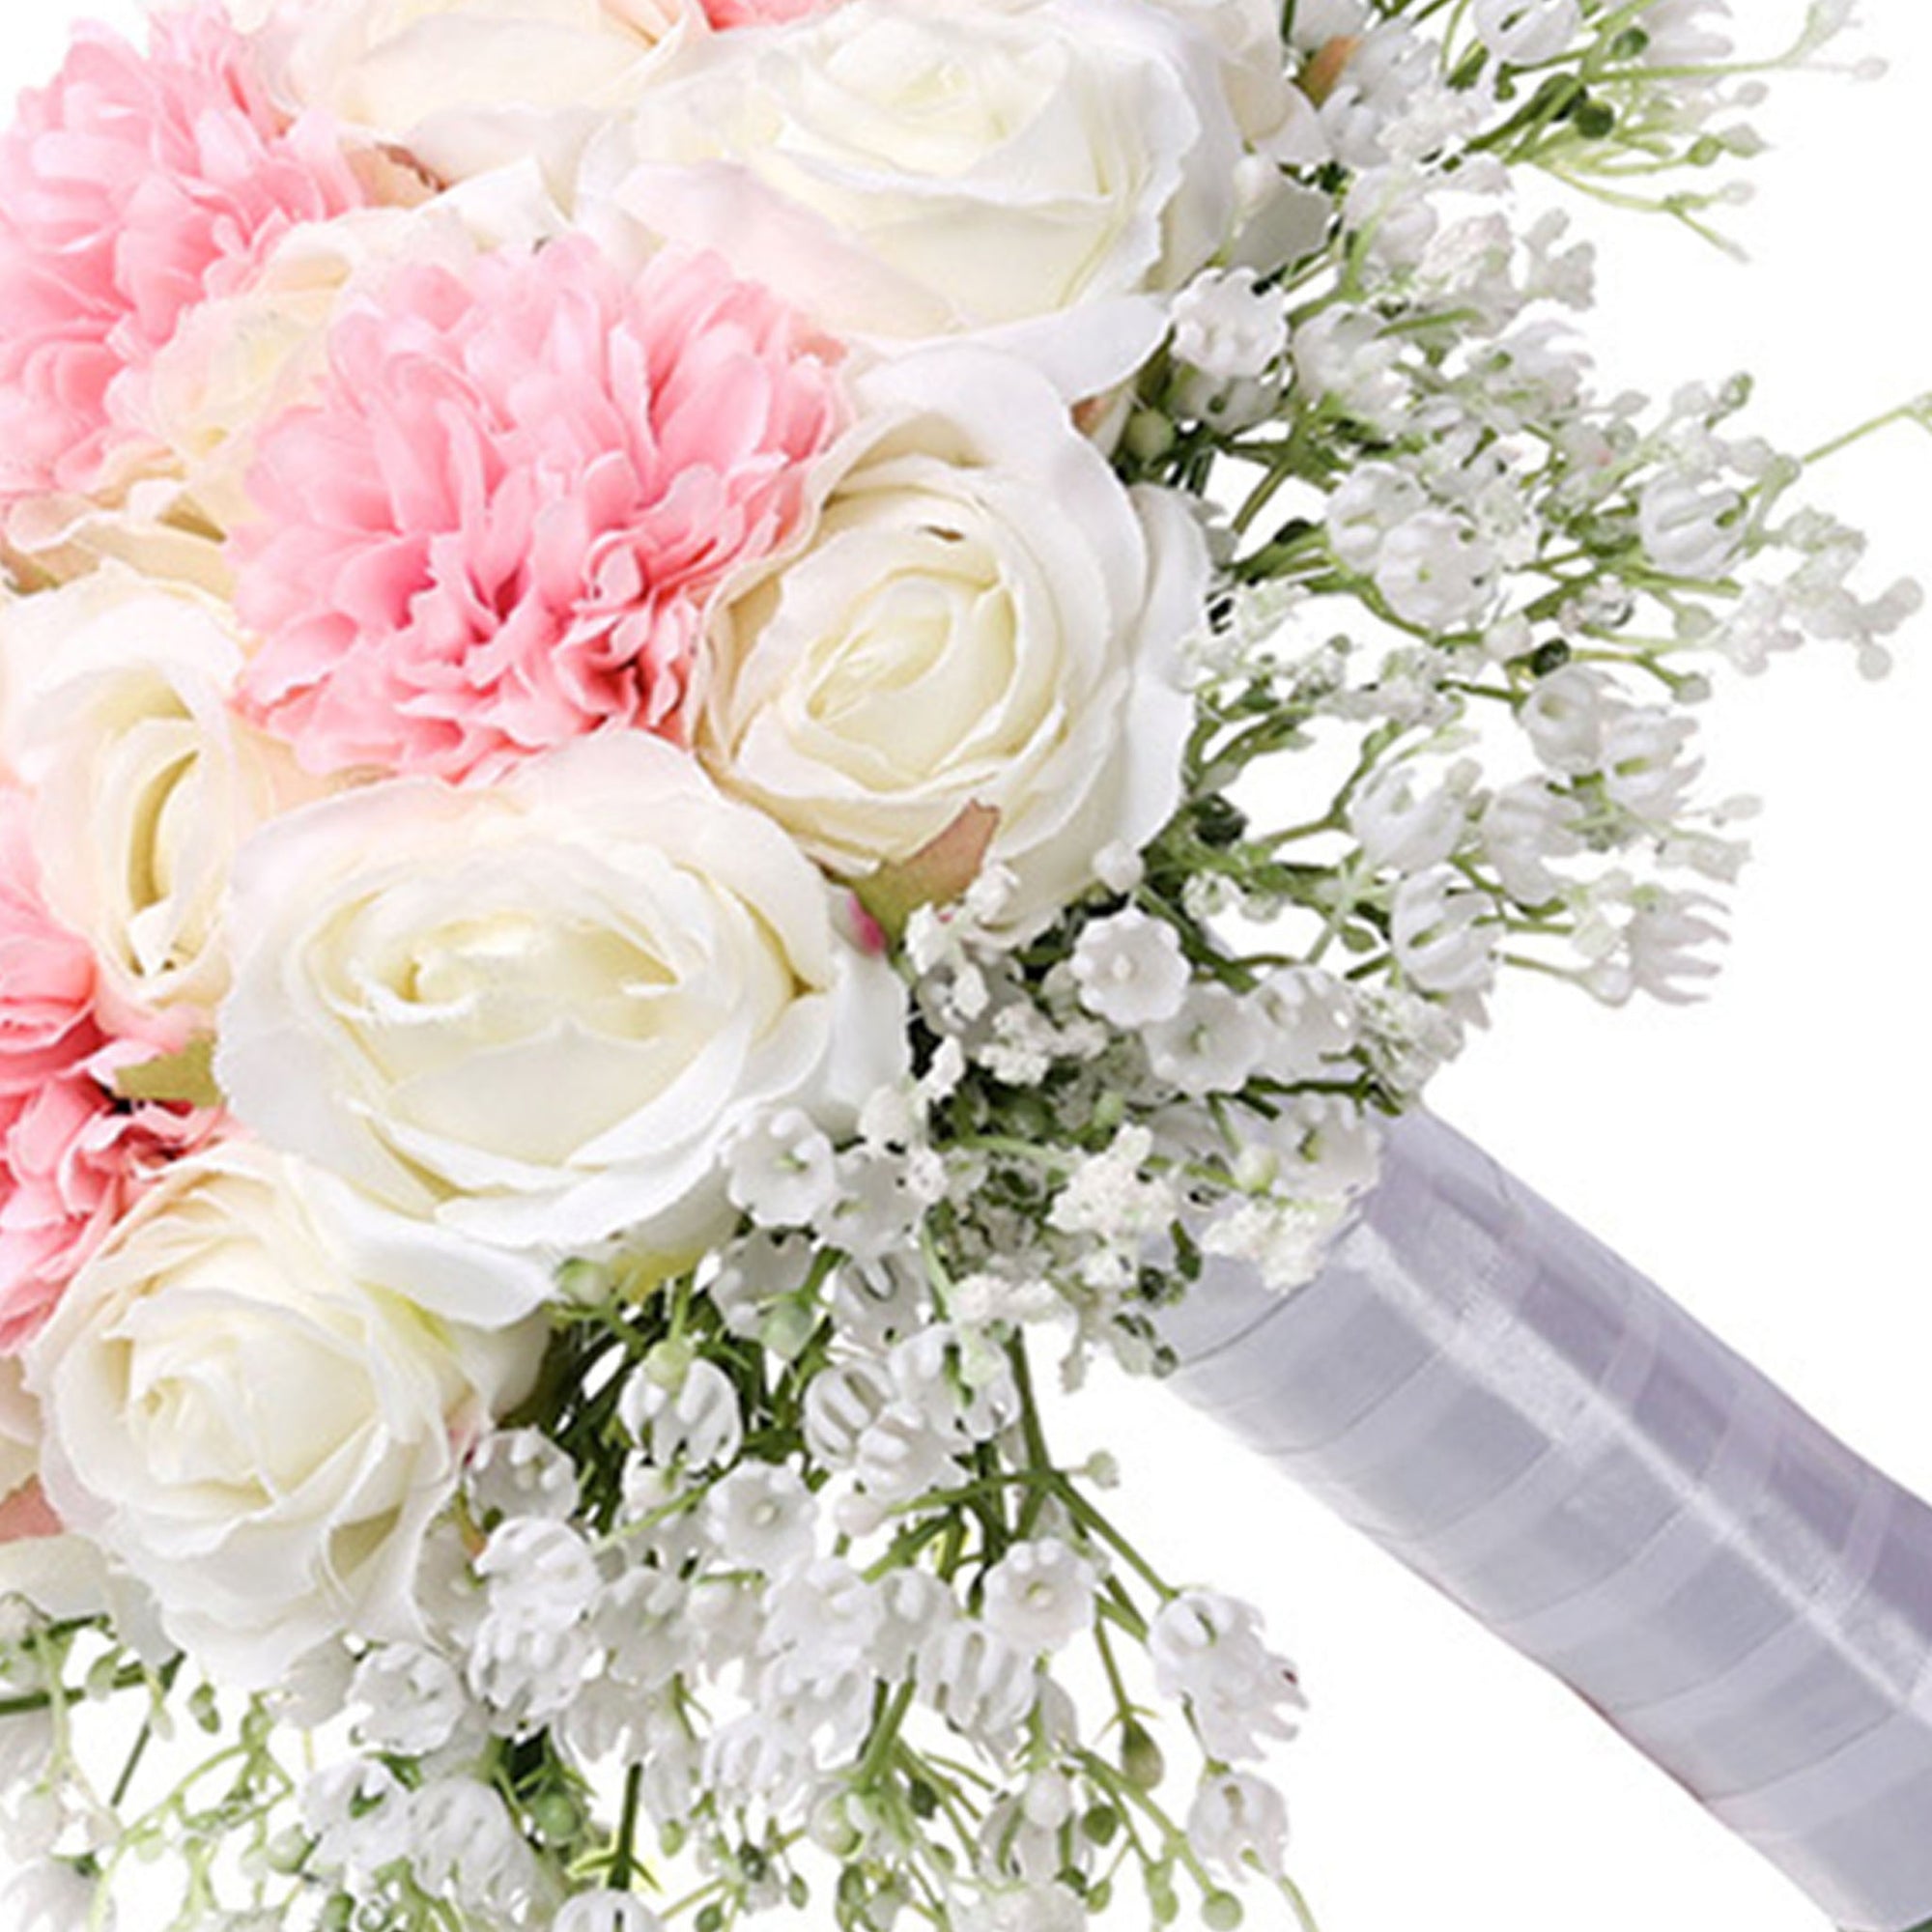 White and Pink Silk Flower Bouquet for Spring Summer Wedding